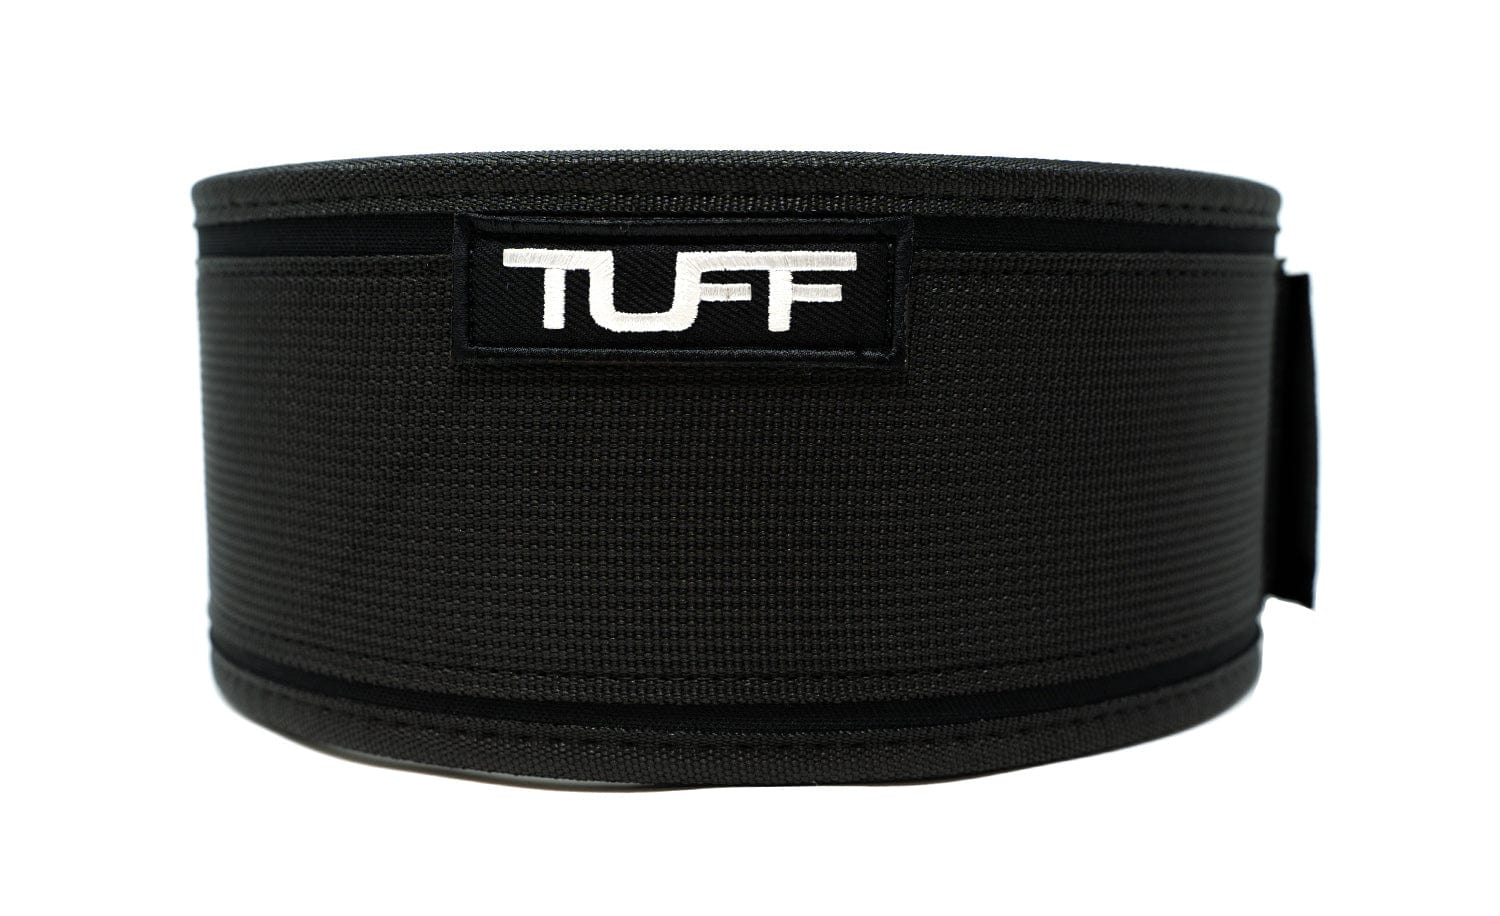 TUFF Self Locking Weightlifting Belt - All Black